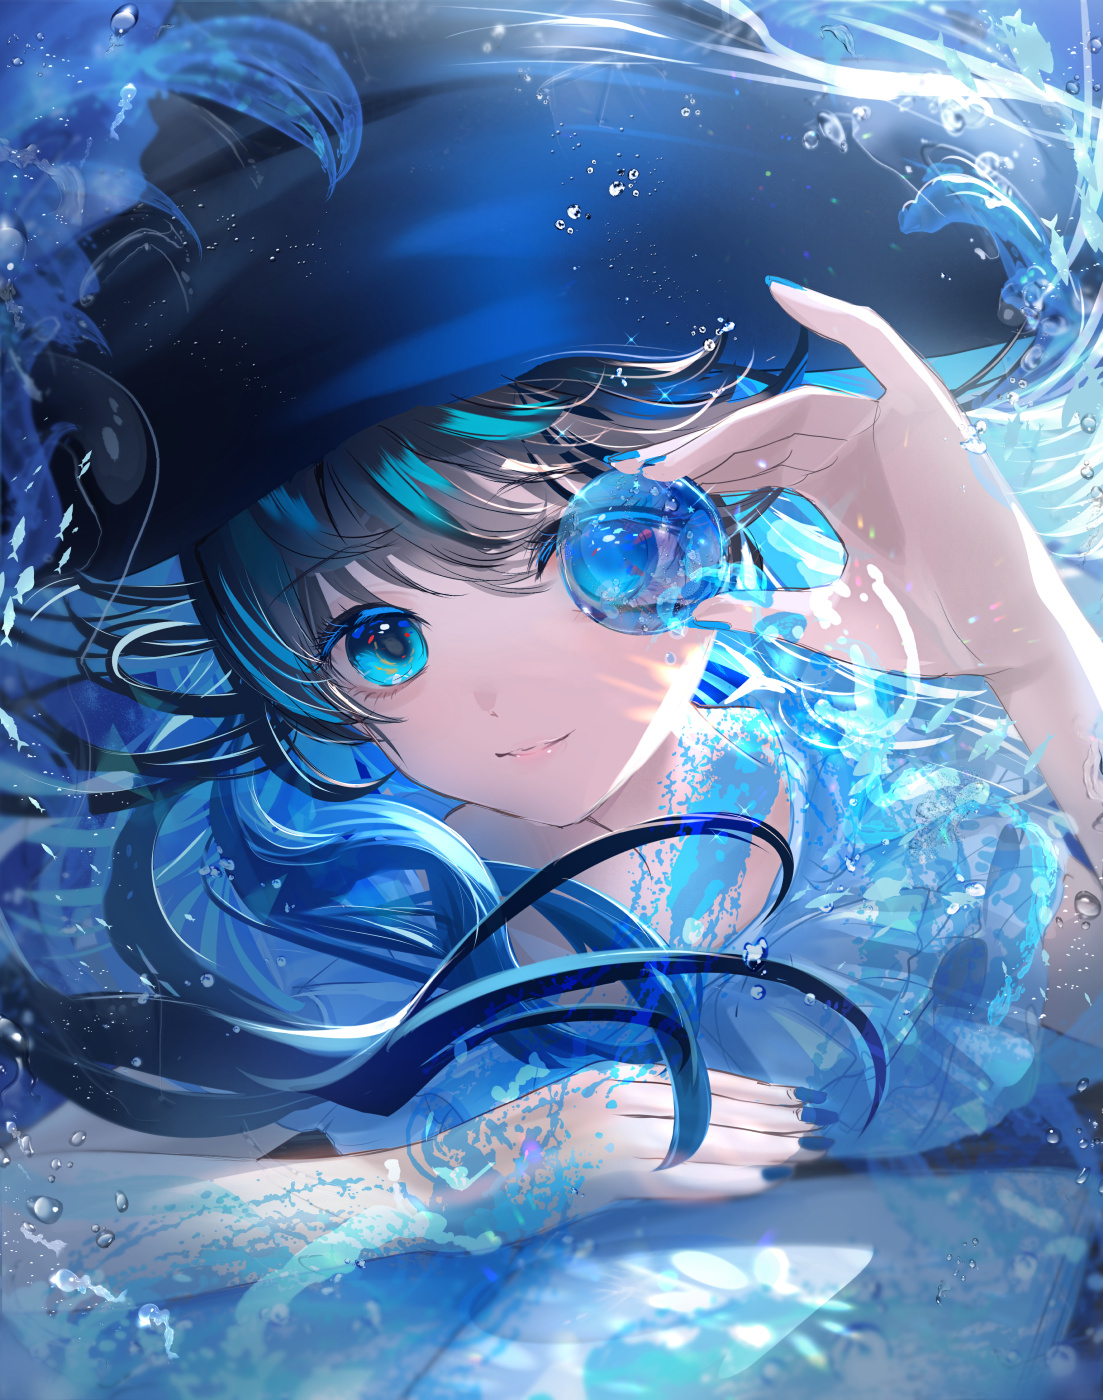 Anime Anime Girls Blue Hair Blue Eyes Portrait Display Smiling Looking At Viewer Long Hair Water